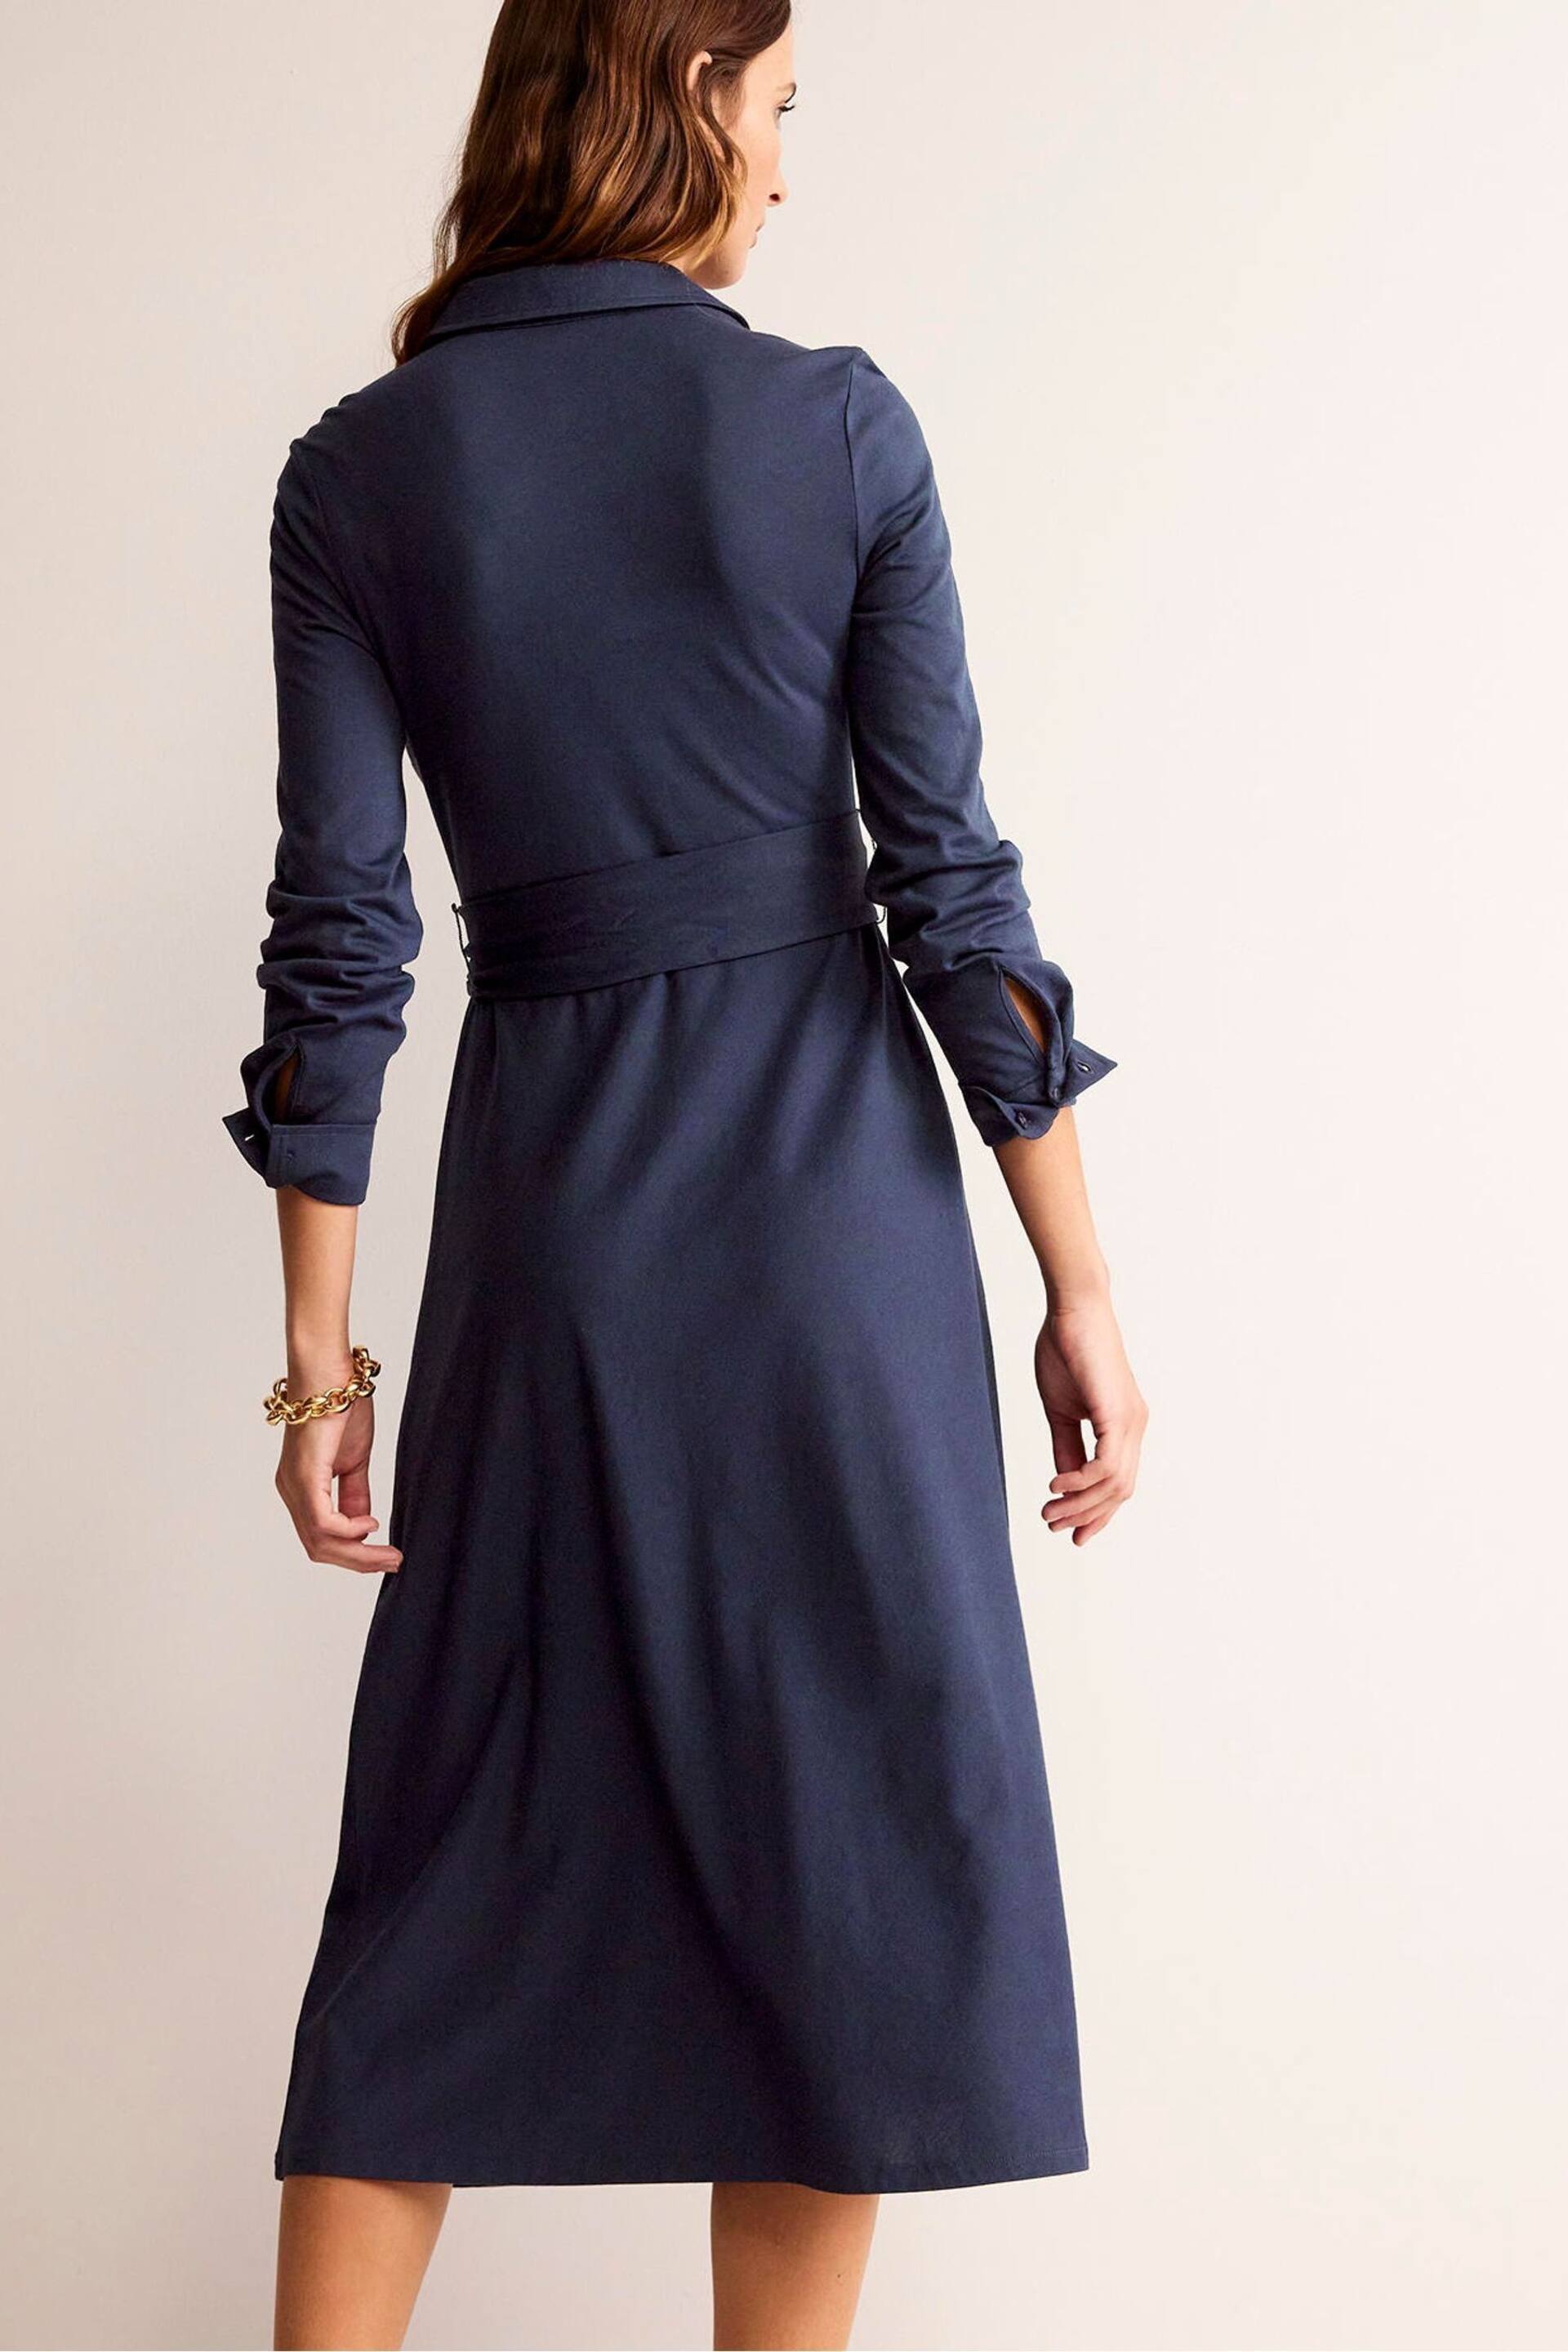 Boden Blue Laura Jersey Midi Shirt Dress - Image 2 of 5